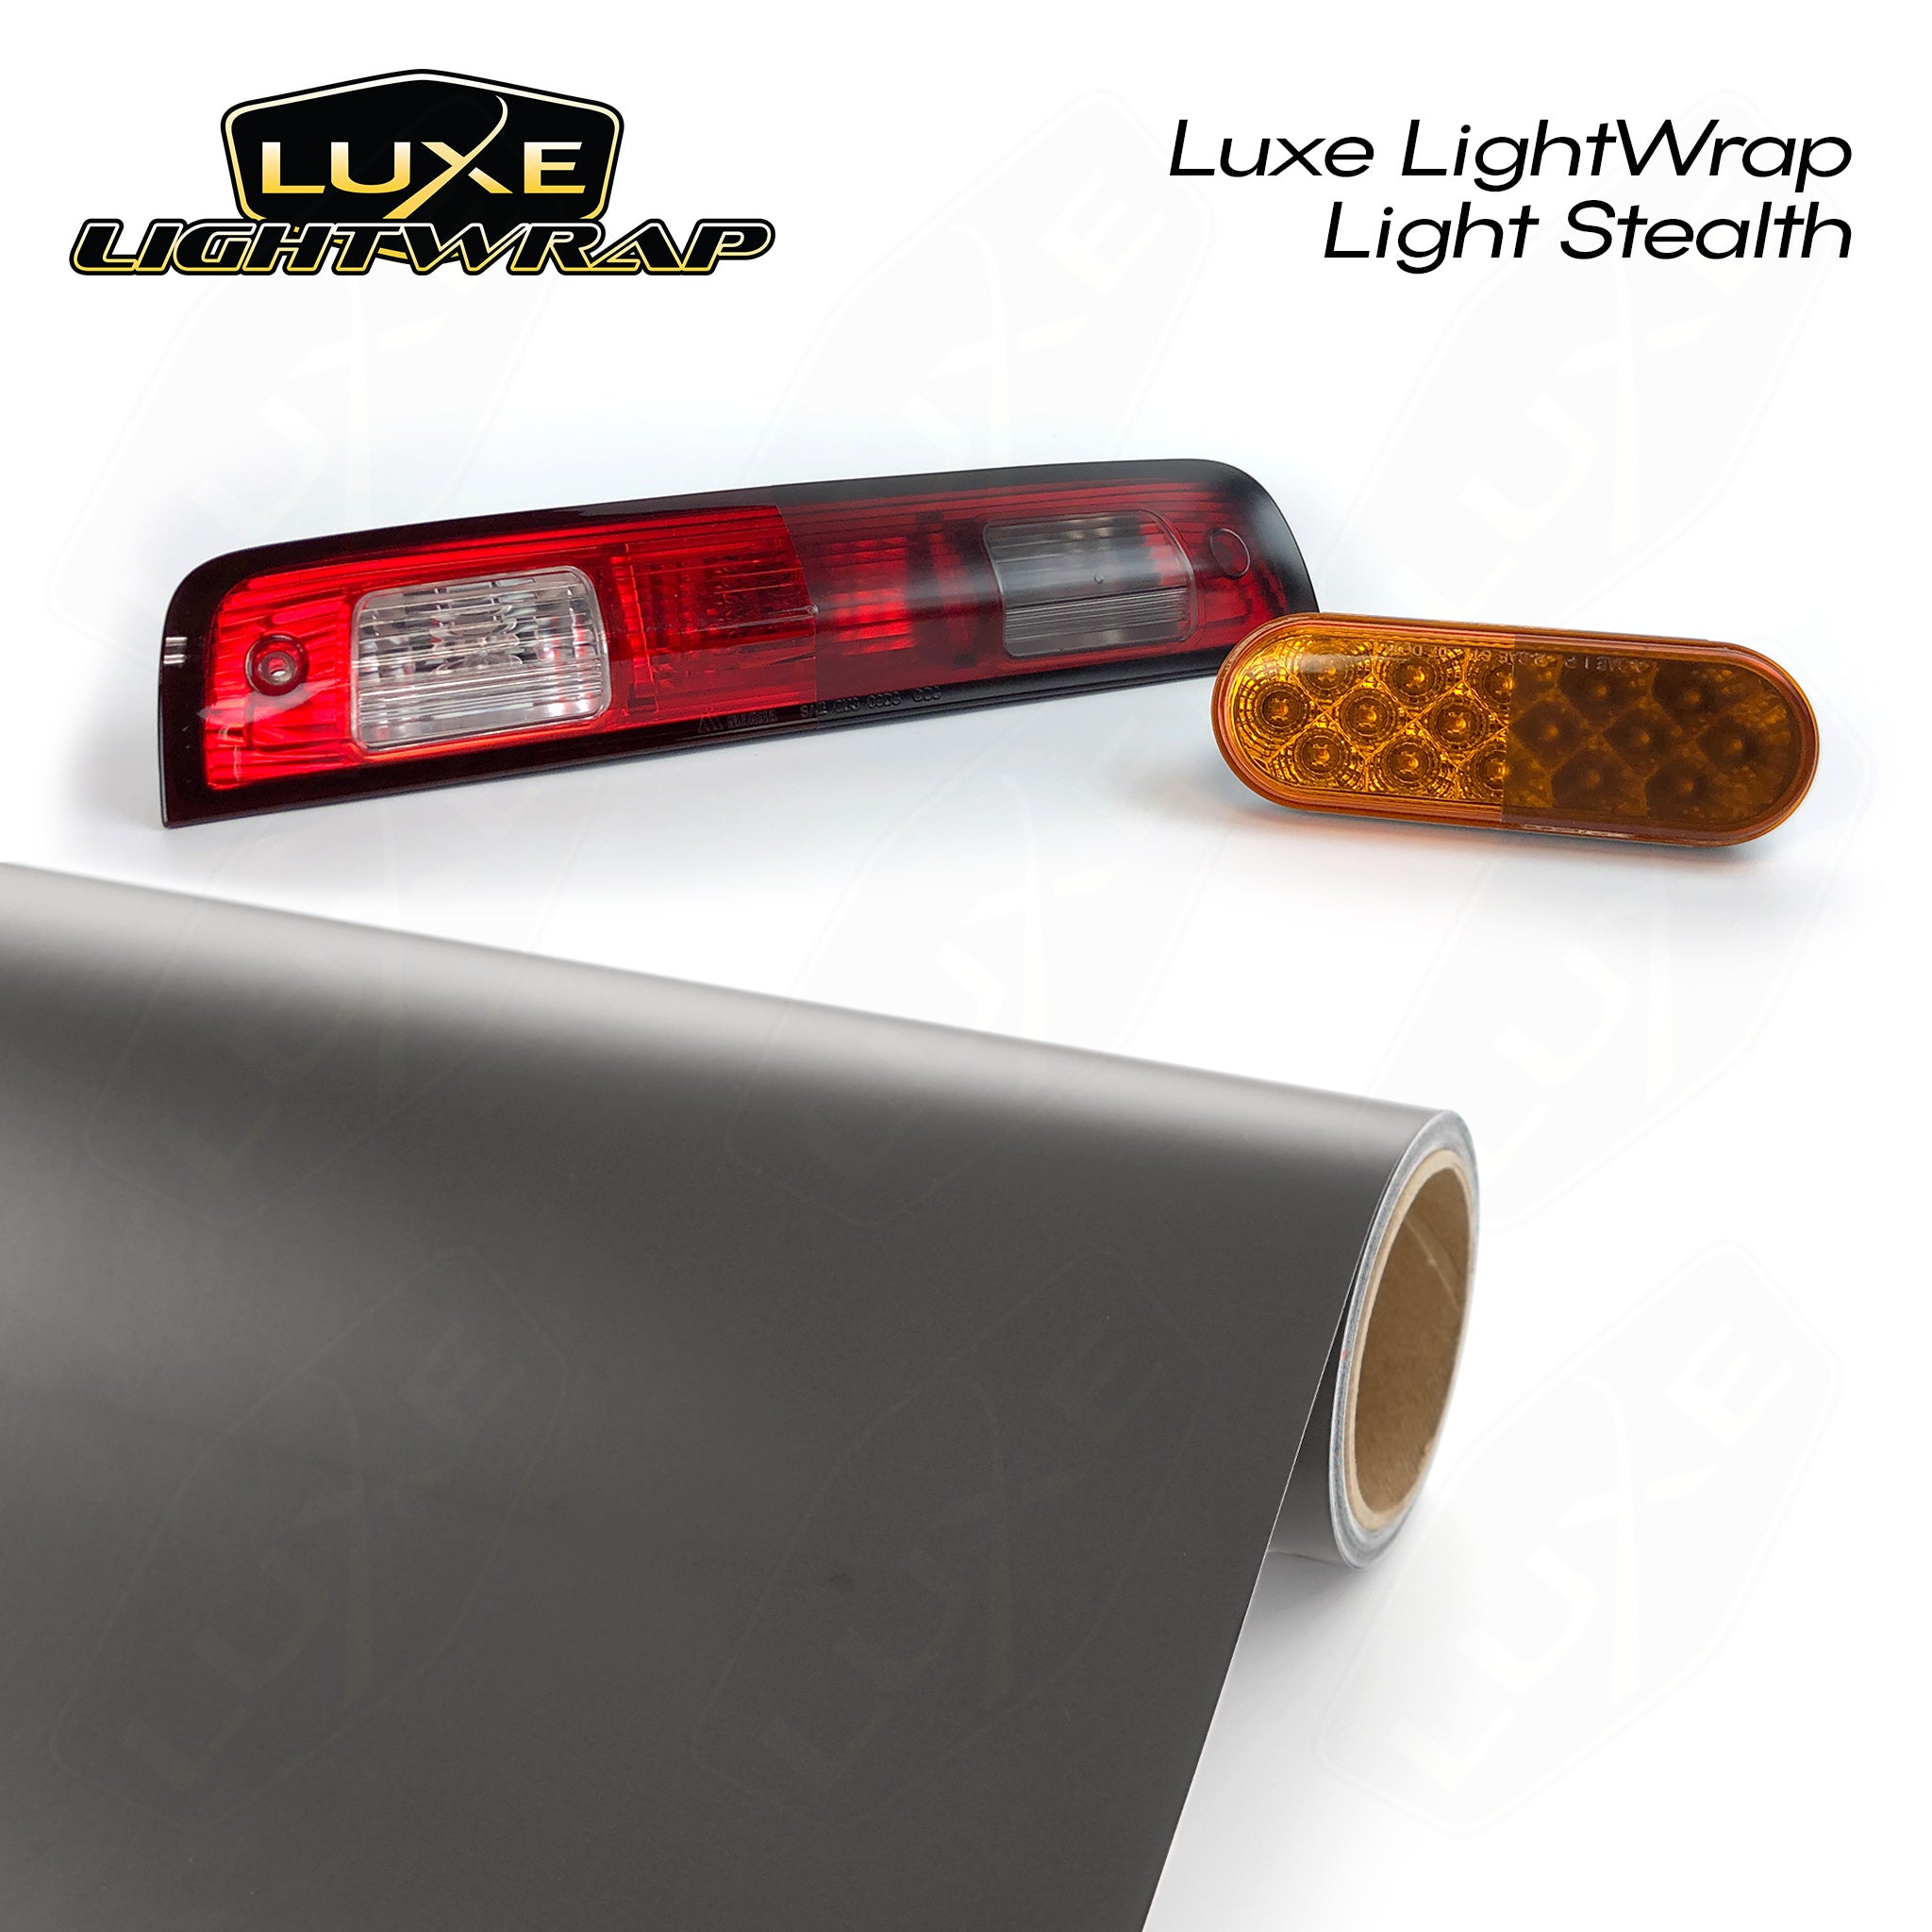 LightWrap Light Stealth - LightWrap